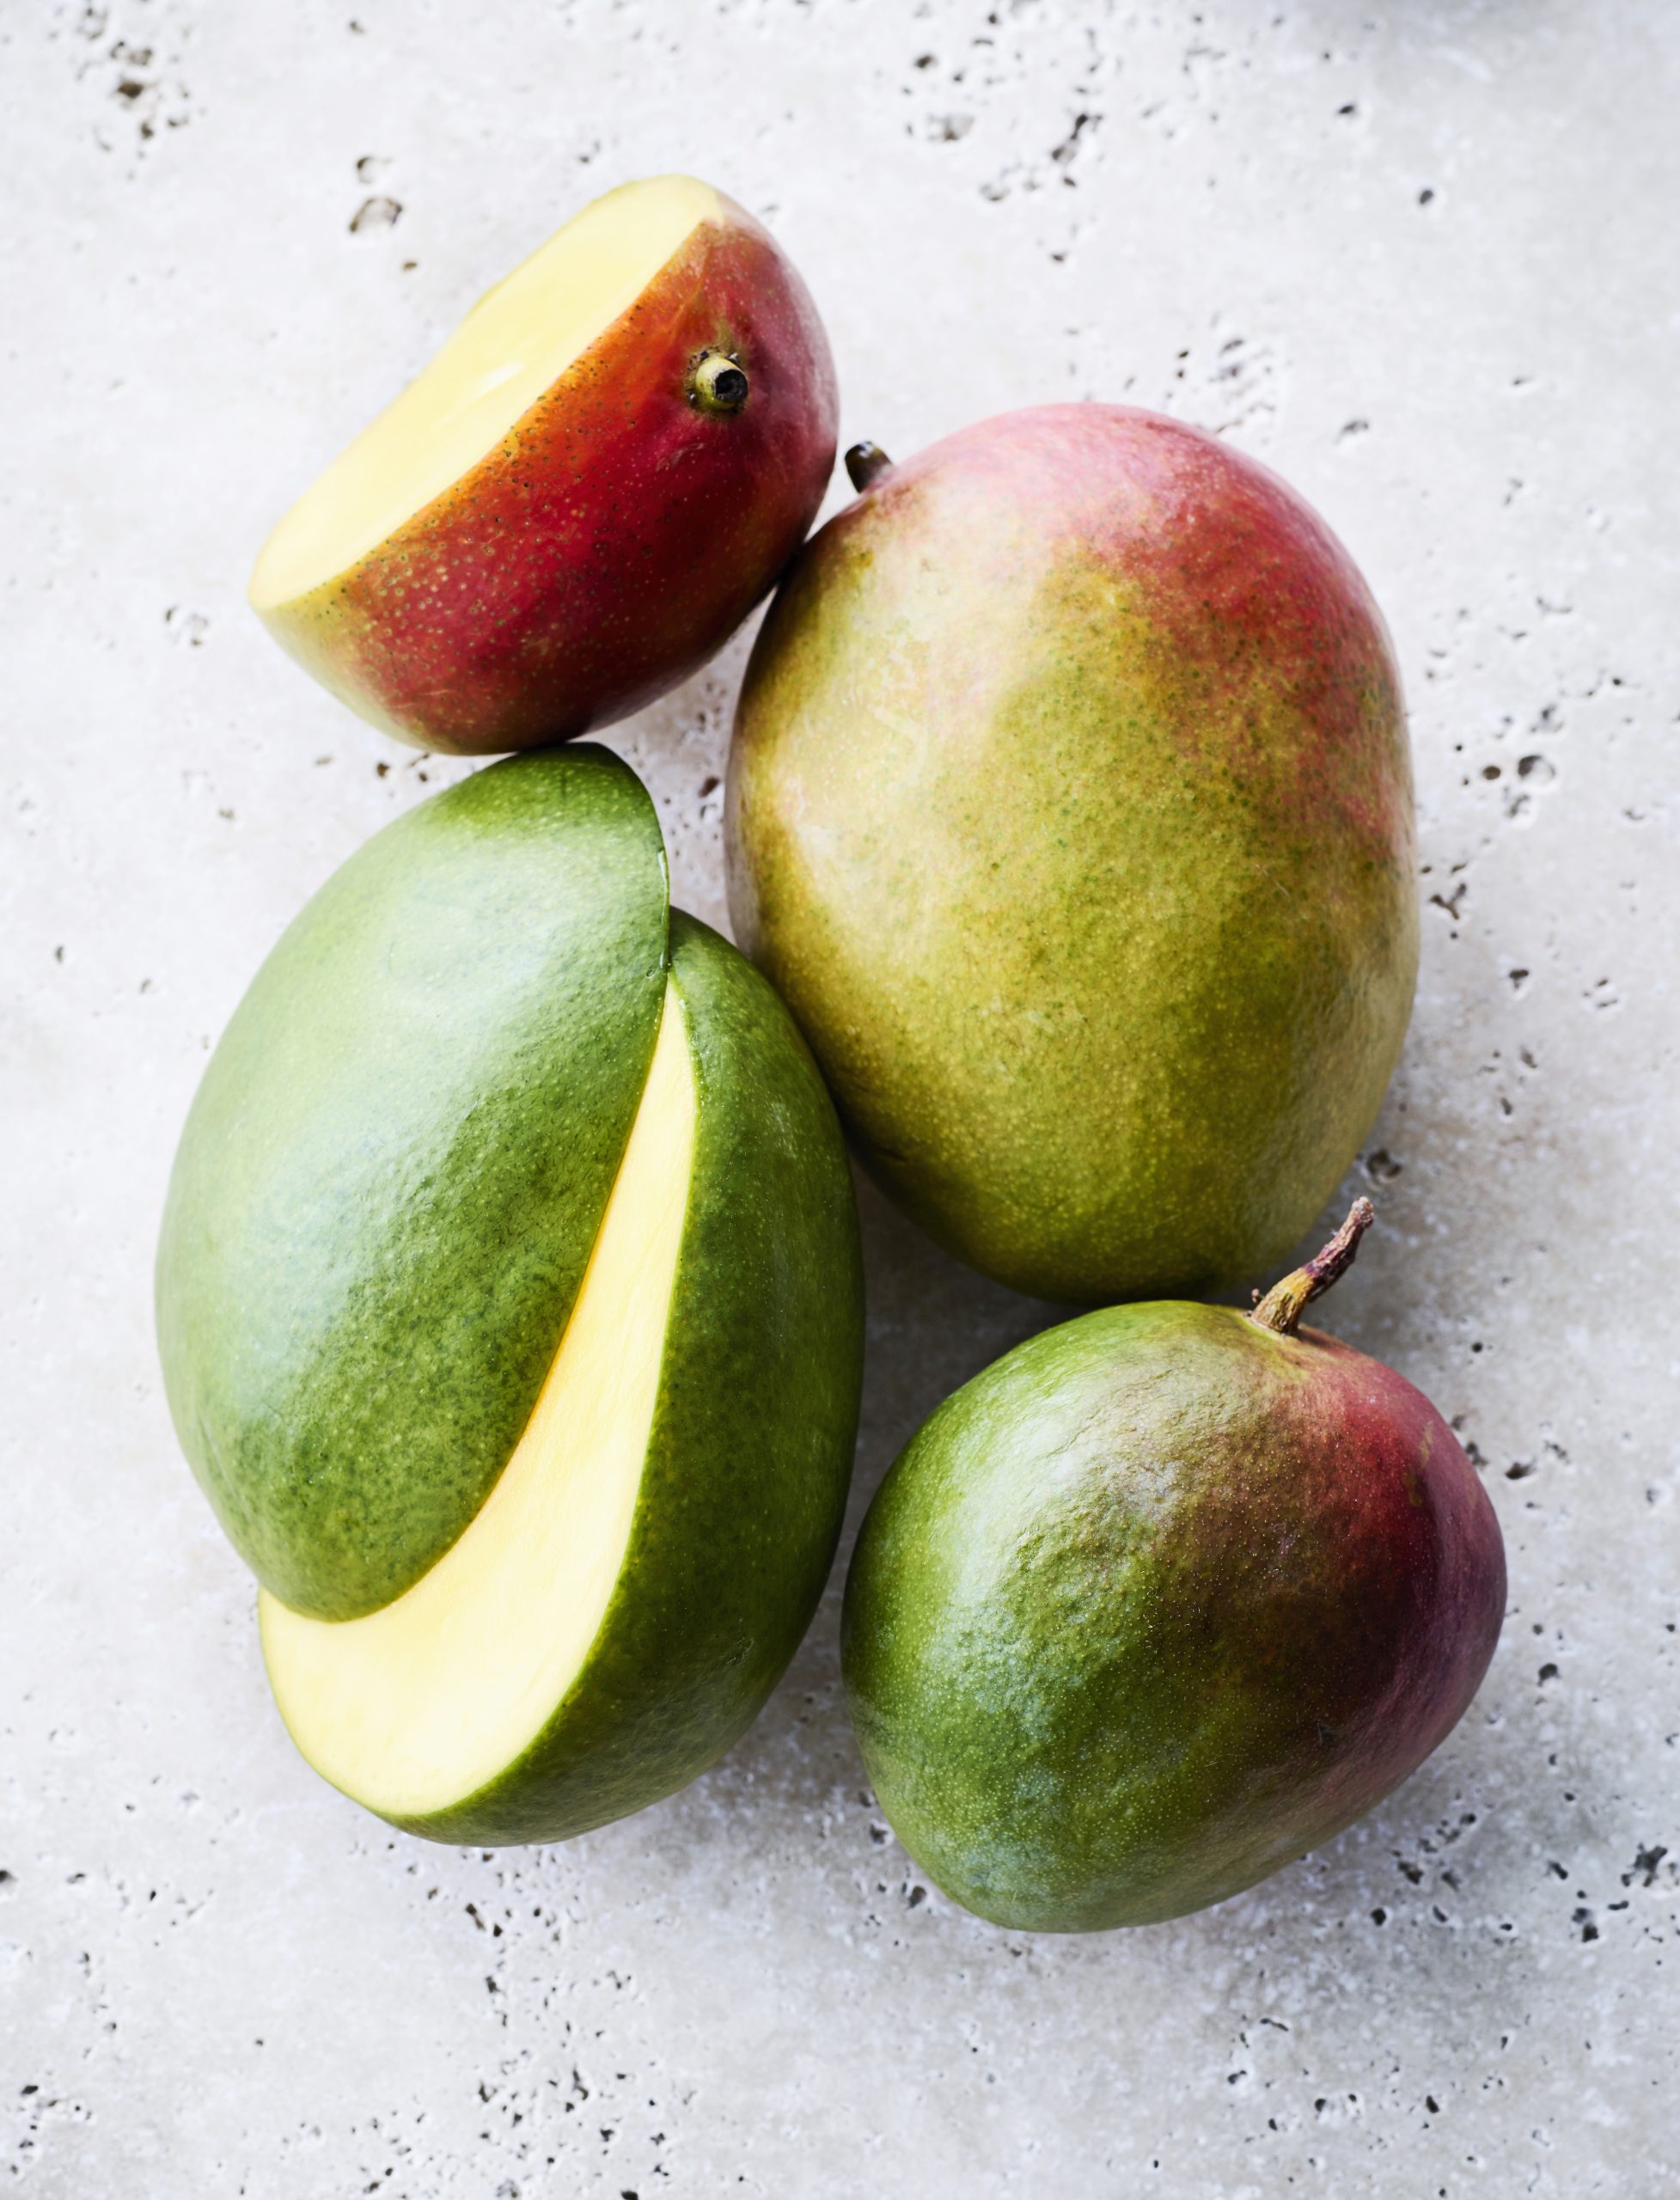 Londen cent vergroting 10x dit wist je nog niet over je favoriete vrucht mango | delicious.magazine